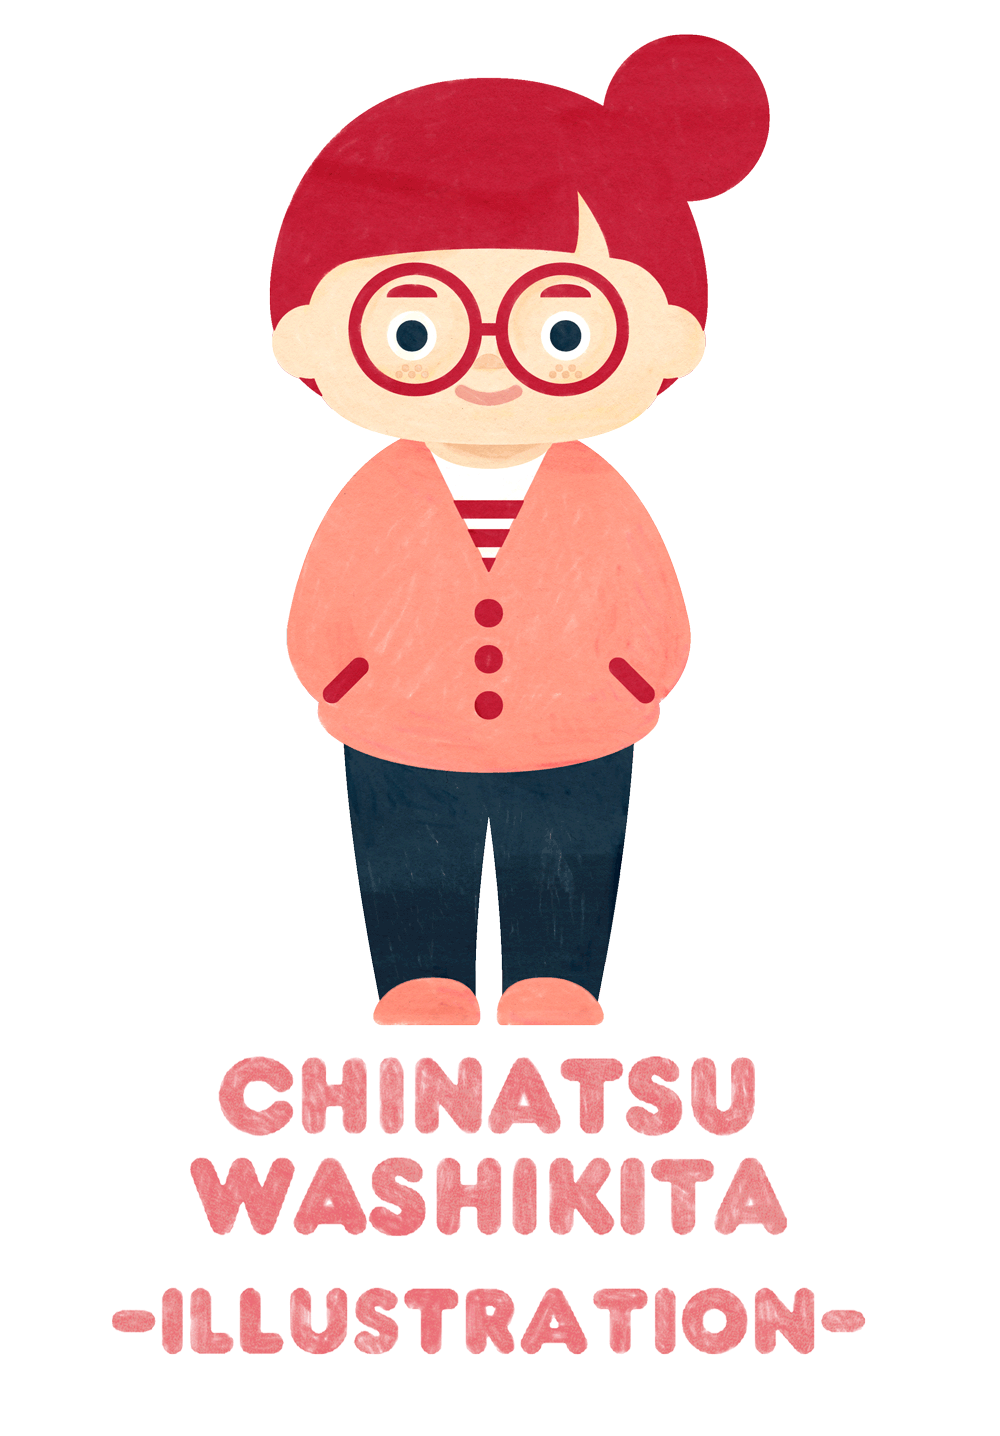 CHINATSU WASHIKITA ILLUSTRATIONS